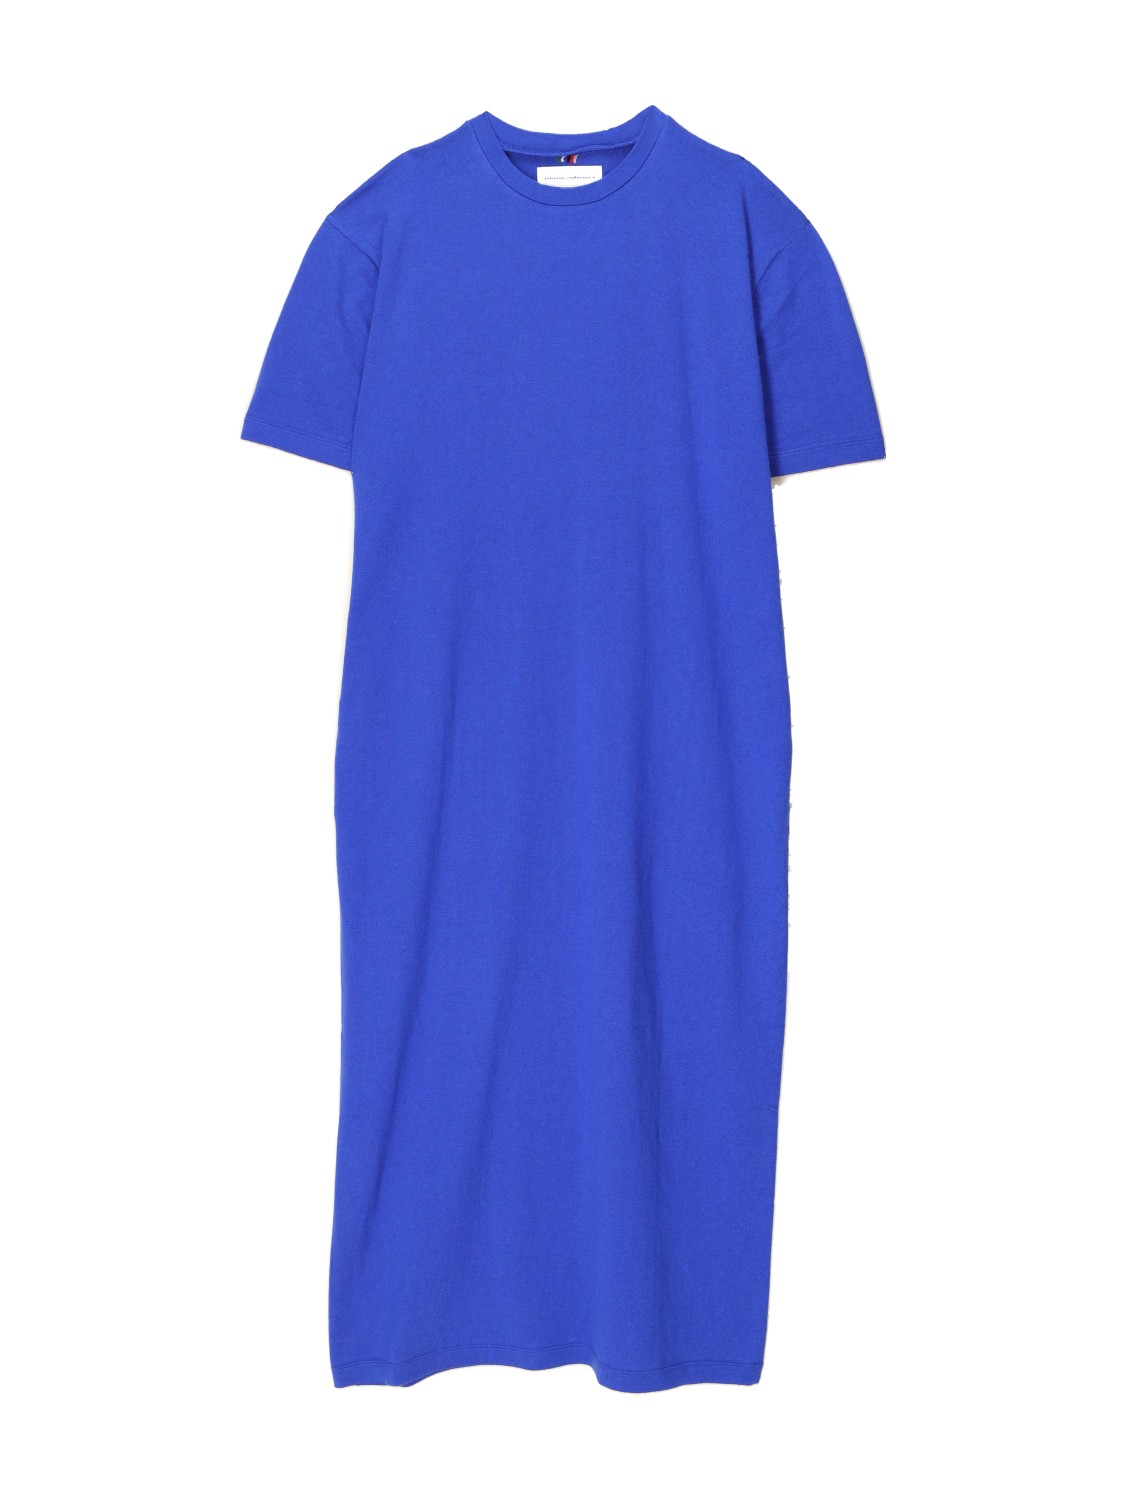 Extreme Cashmere N°321 Kris - Vestido camisero oversize en mezcla de cachemira y algodón azul Talla única